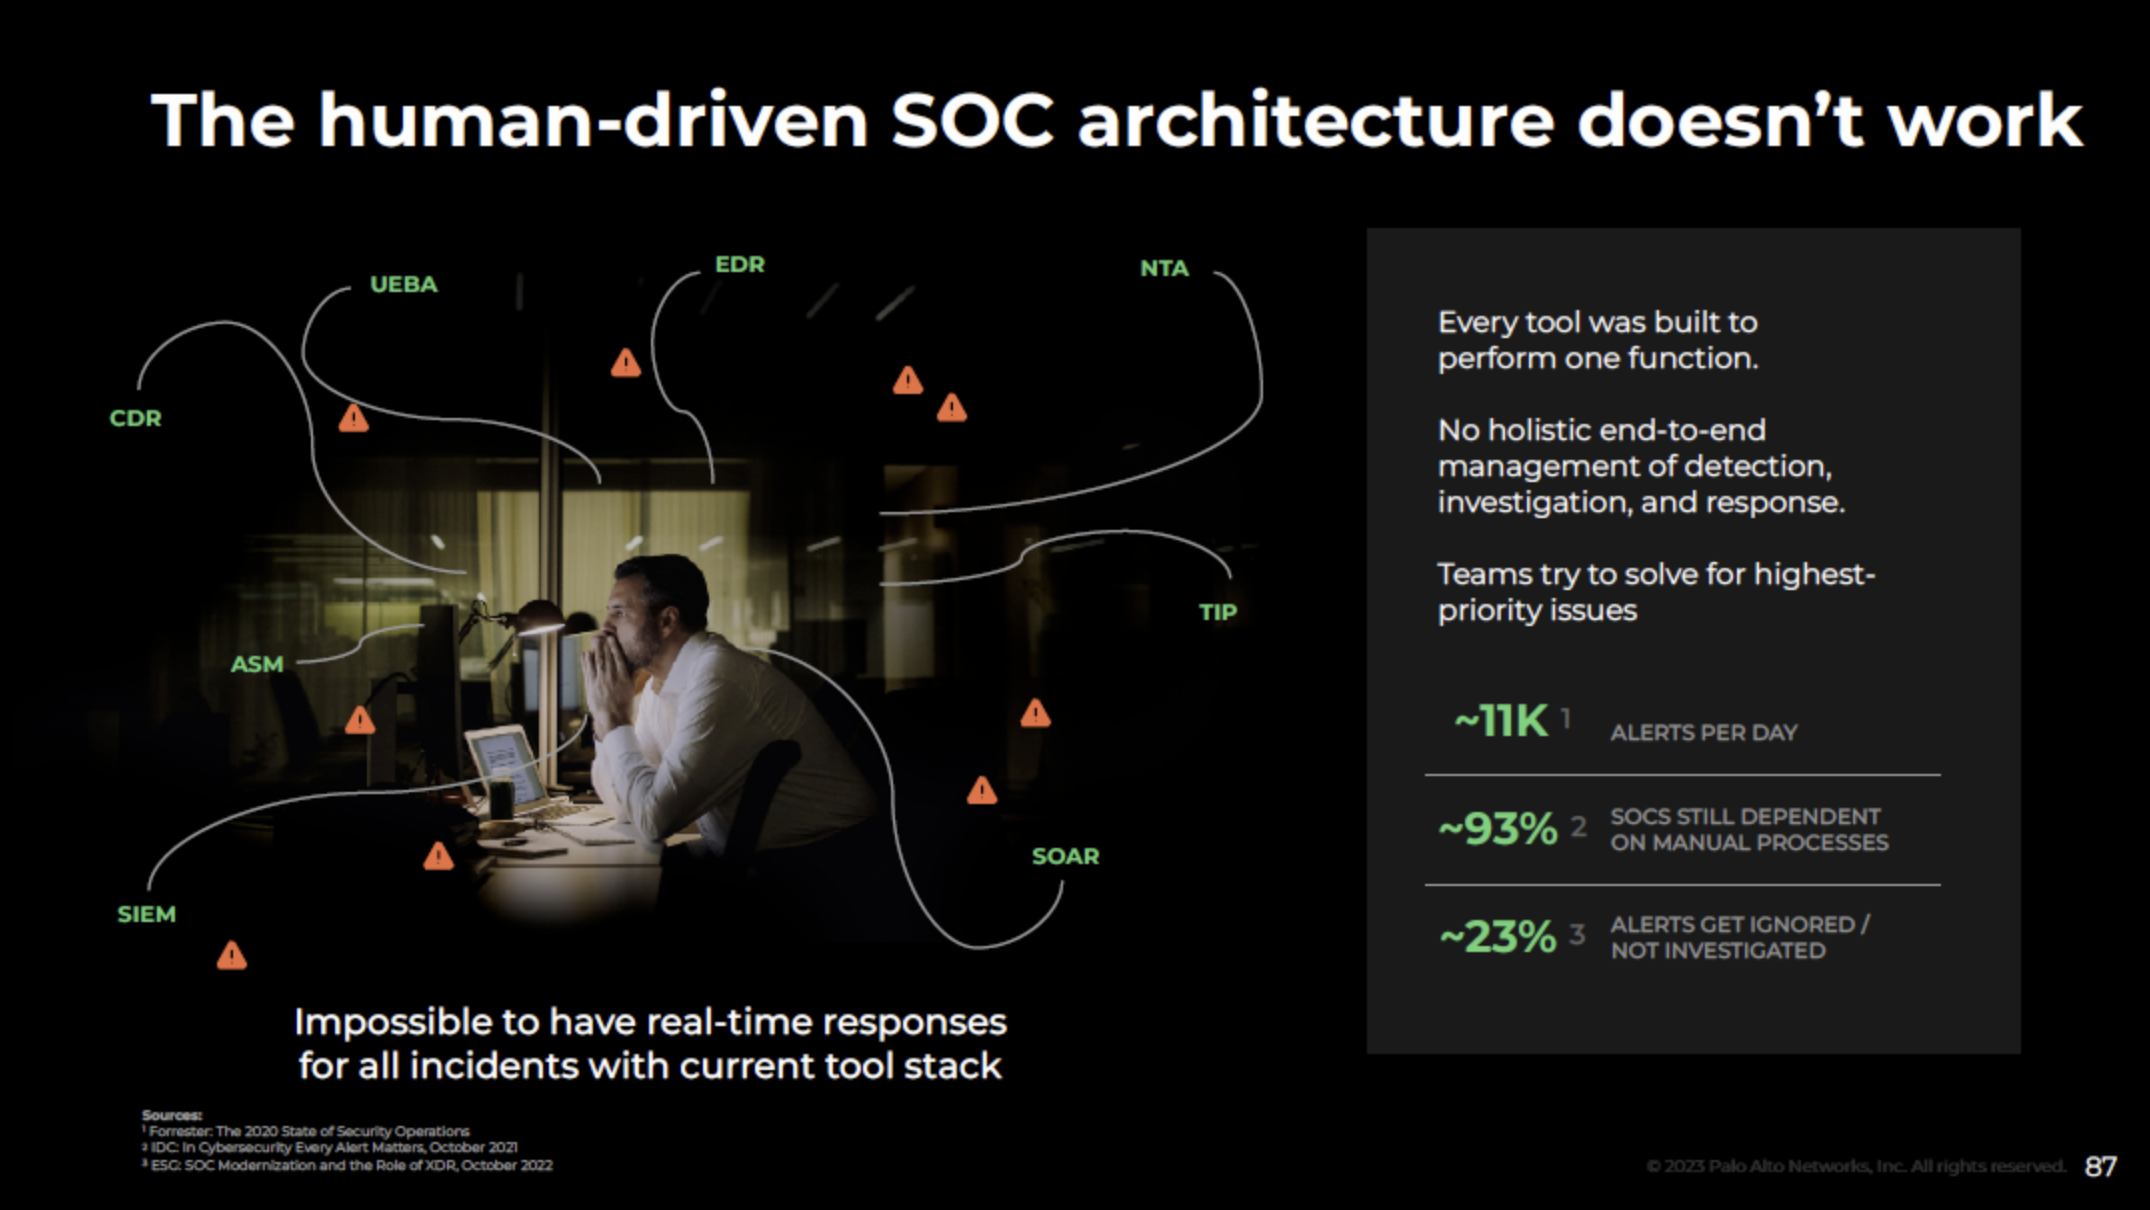 Palo Alto Networks human-driven SOC architecture slide